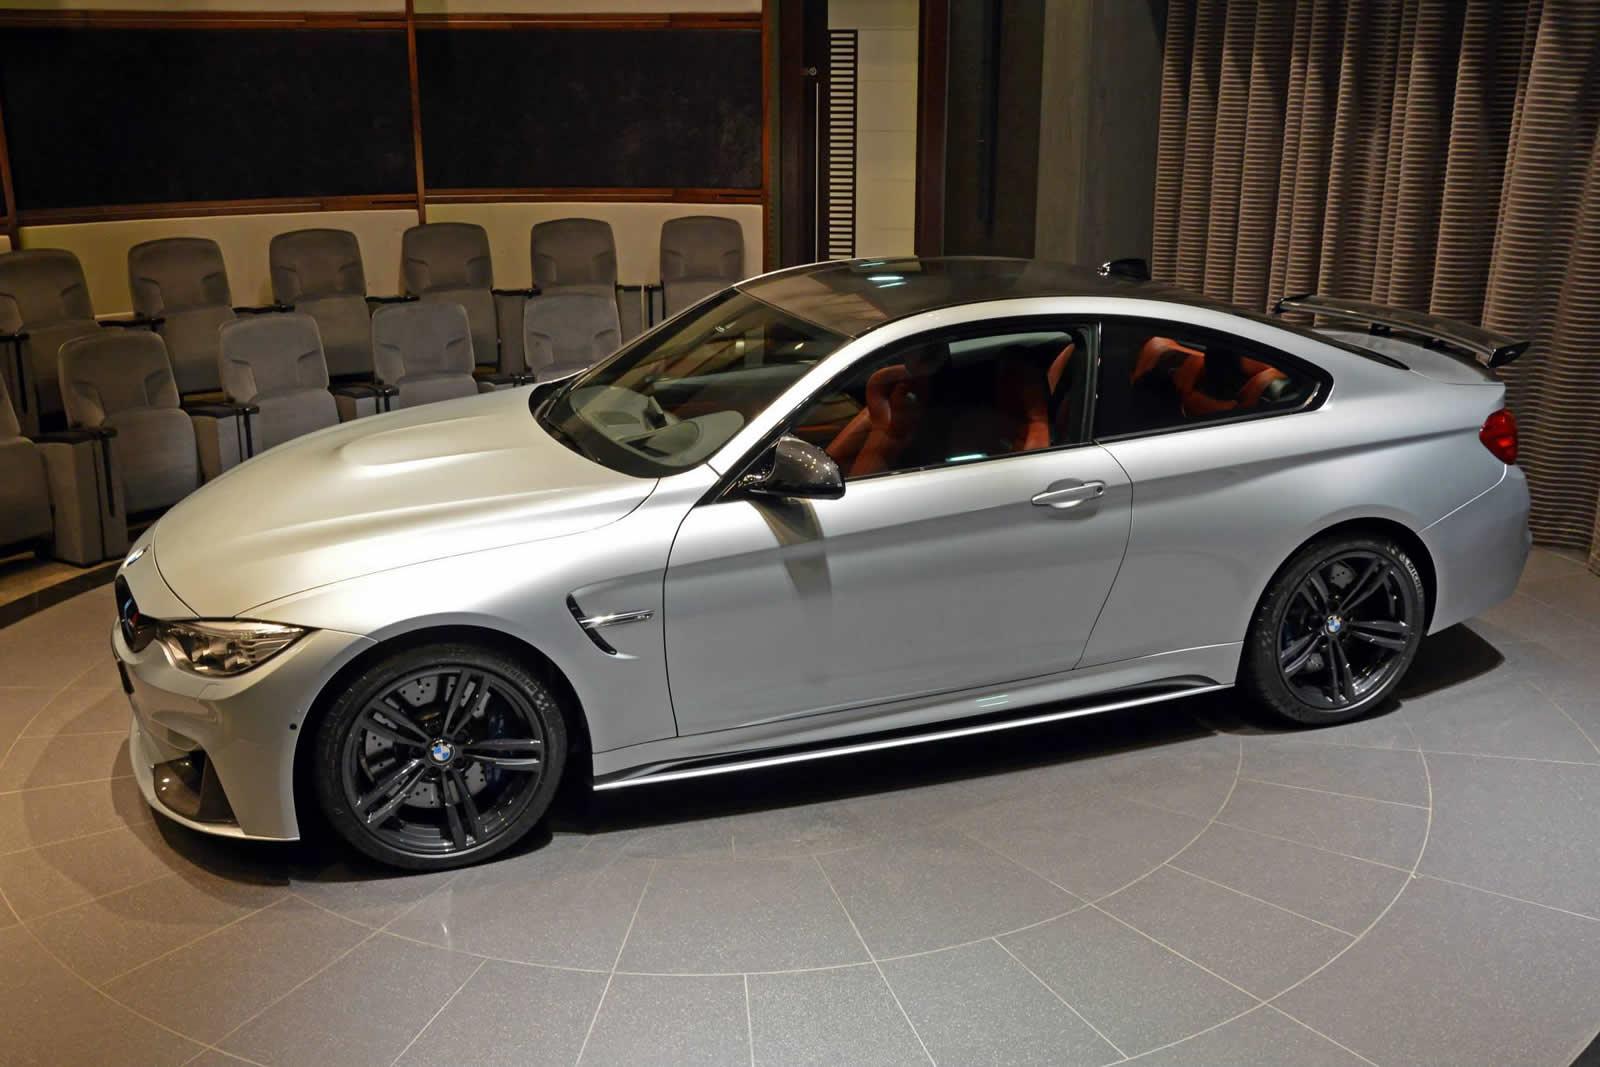 BMW M4 Coupe at BMW Abu Dhabi